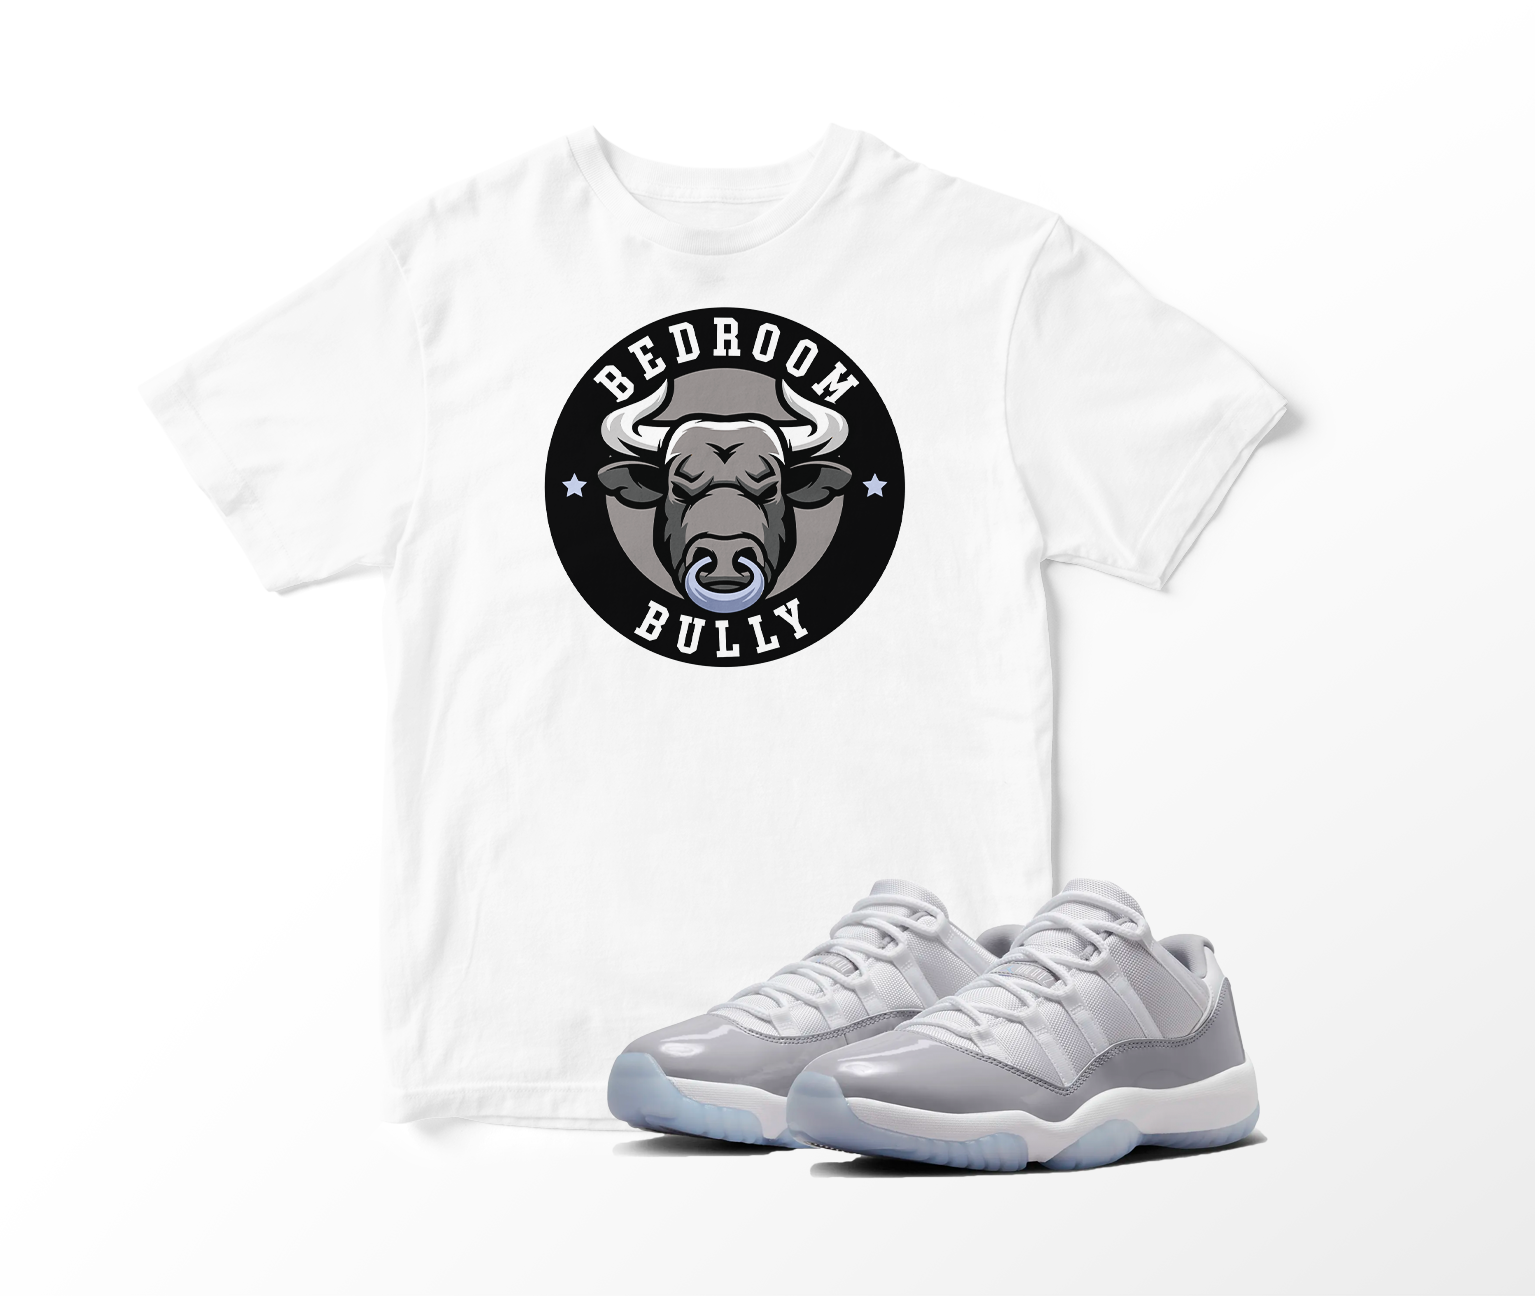 'Bedroom Bully' Custom Graphic Short Sleeve T-Shirt To Match Air Jordan 11 Low Cool Grey